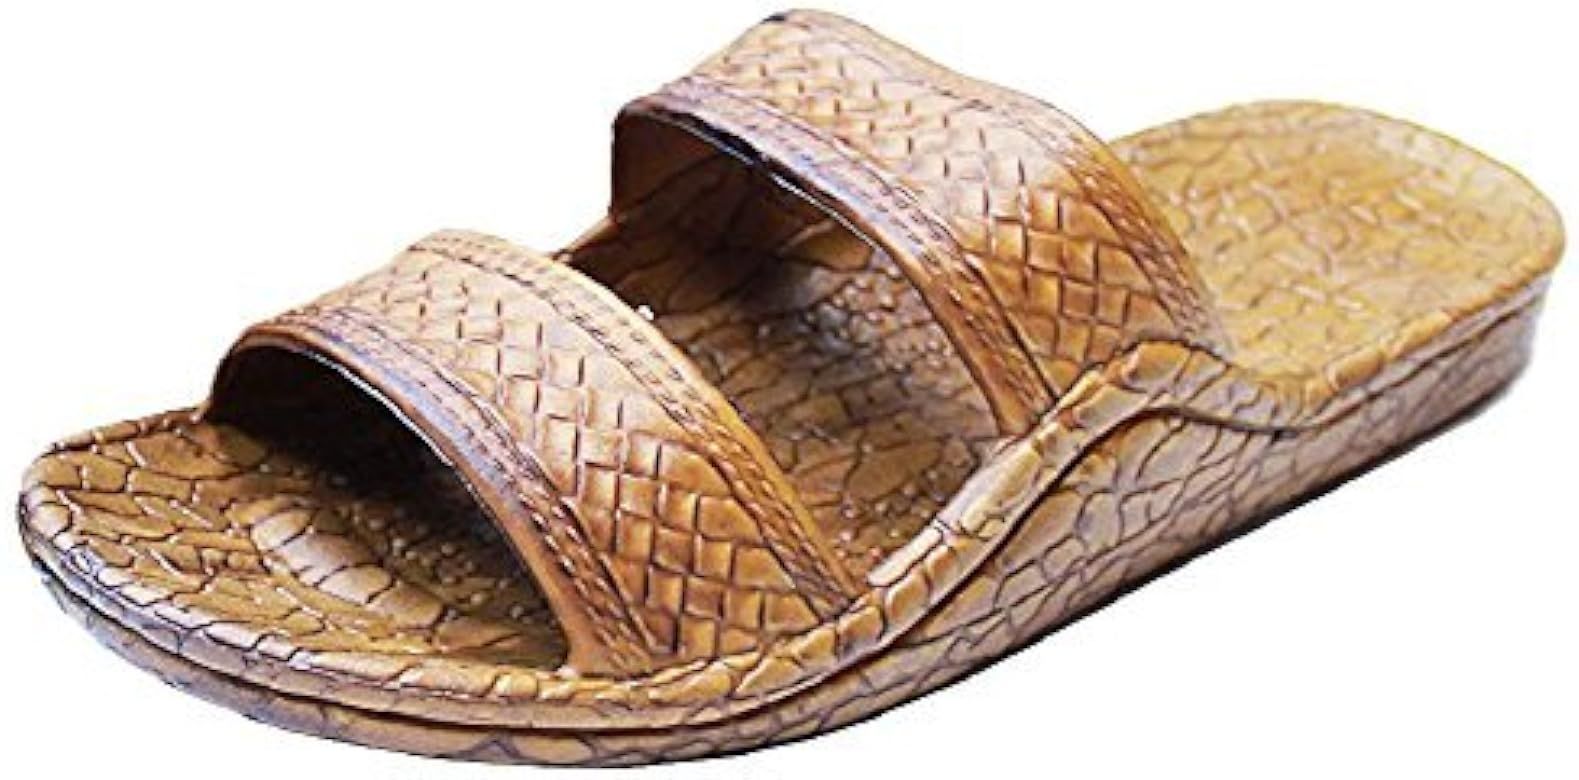 Pali Hawaii Unisex Adult Classic Jandals Sandals | Amazon (US)